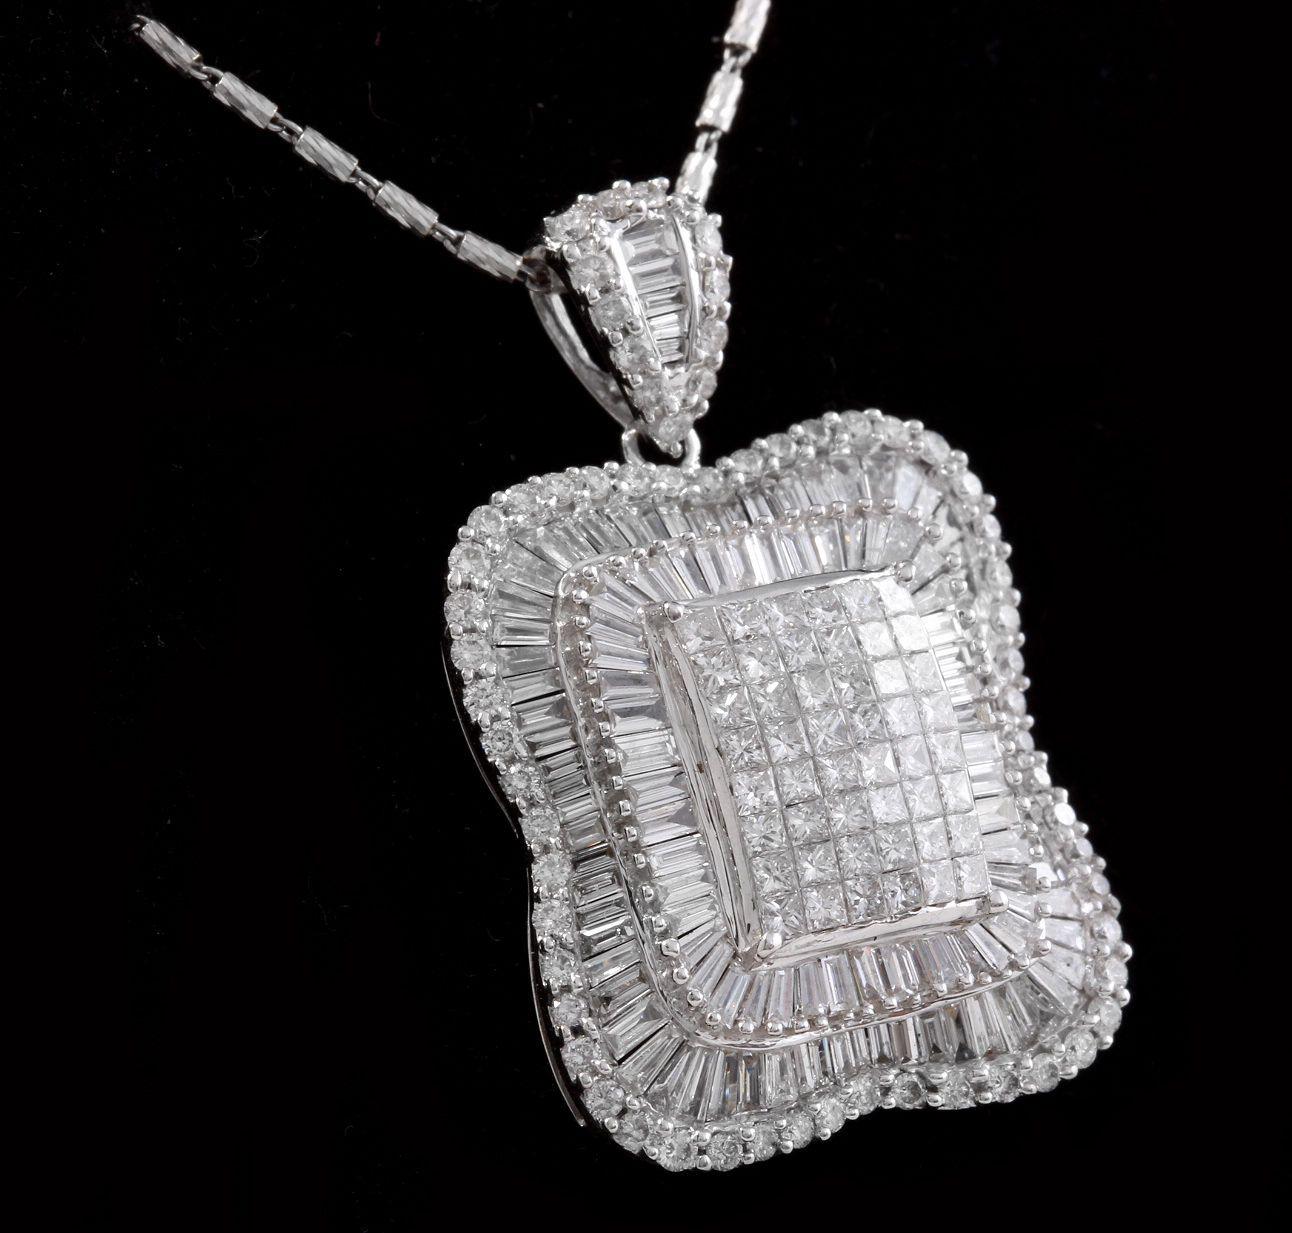 Splendid 7.28 Carats Natural VVS Diamond 18K Solid White Gold Necklace
Amazing looking piece!

Stamped: 18K (Pendant) 14K(Chain)

Total Natural Round, Baguette & Princess Cut White Diamonds Weight: 7.28 Carats (color F-G / Clarity VVS1-VVS2)

Chain